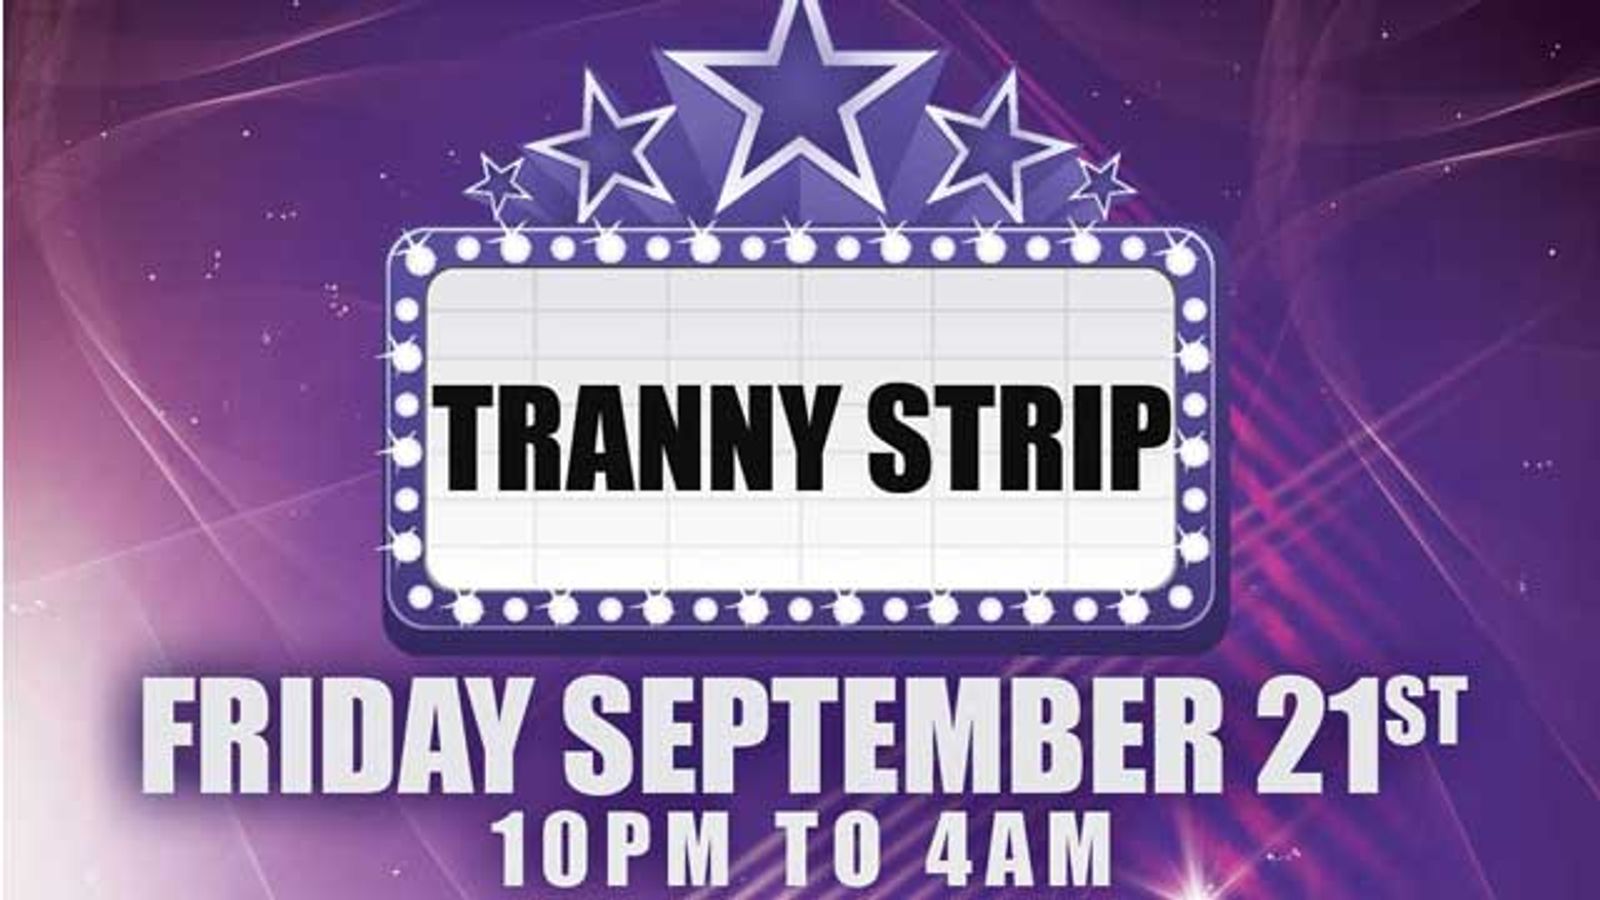 TS Porn Star Kayden Harley to Appear at NYC’s Tranny Strip